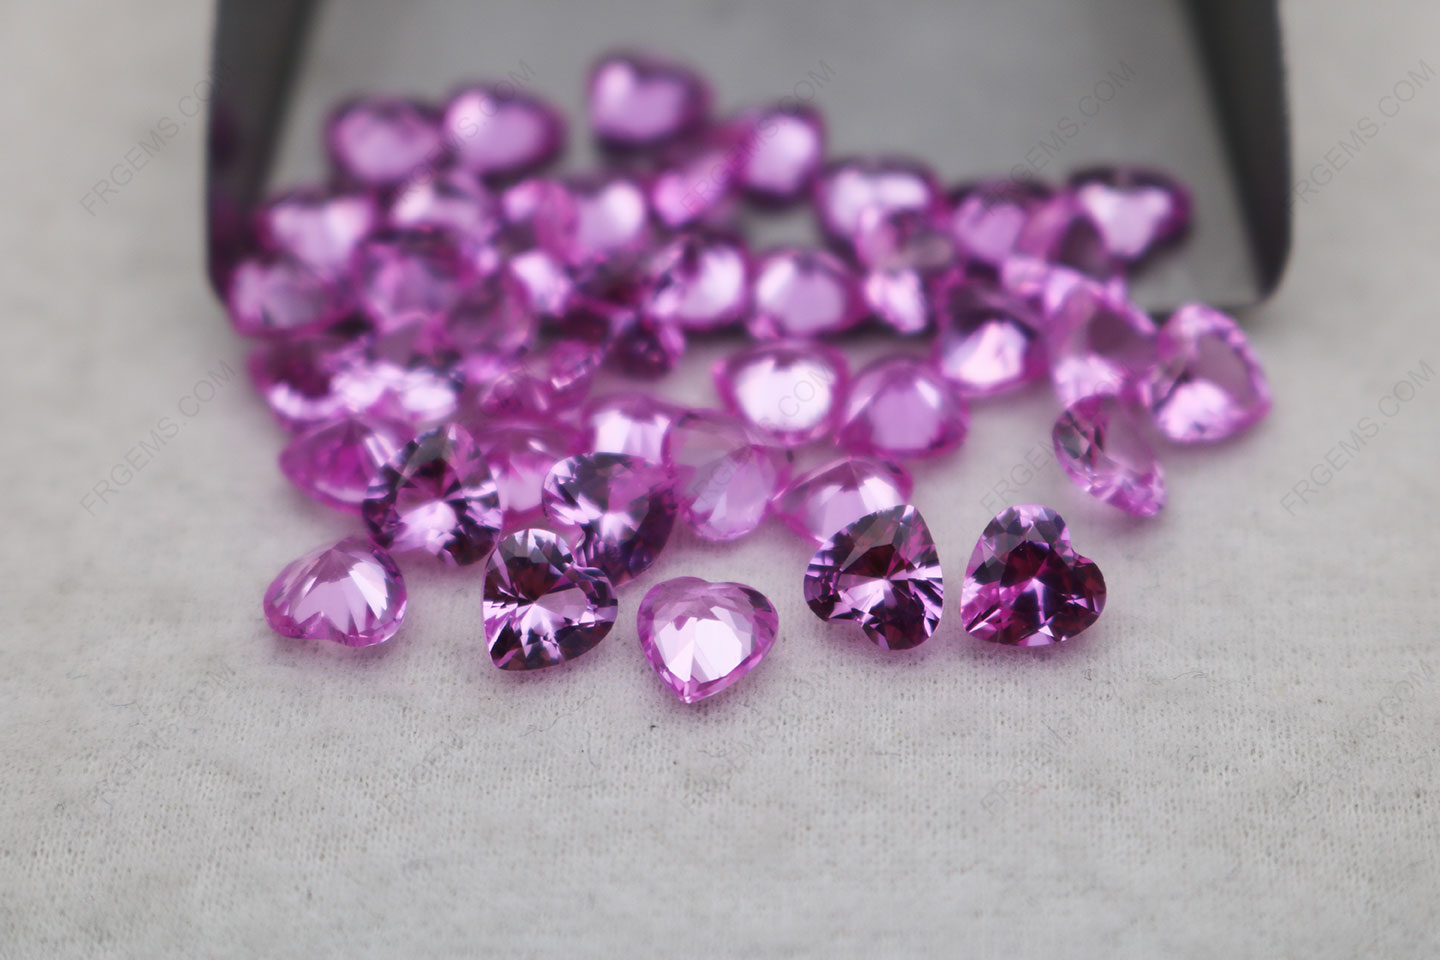 Wholesale Corundum Pink Sapphire #2 color Heart Shape Faceted Cut 6x6mm gemstones China